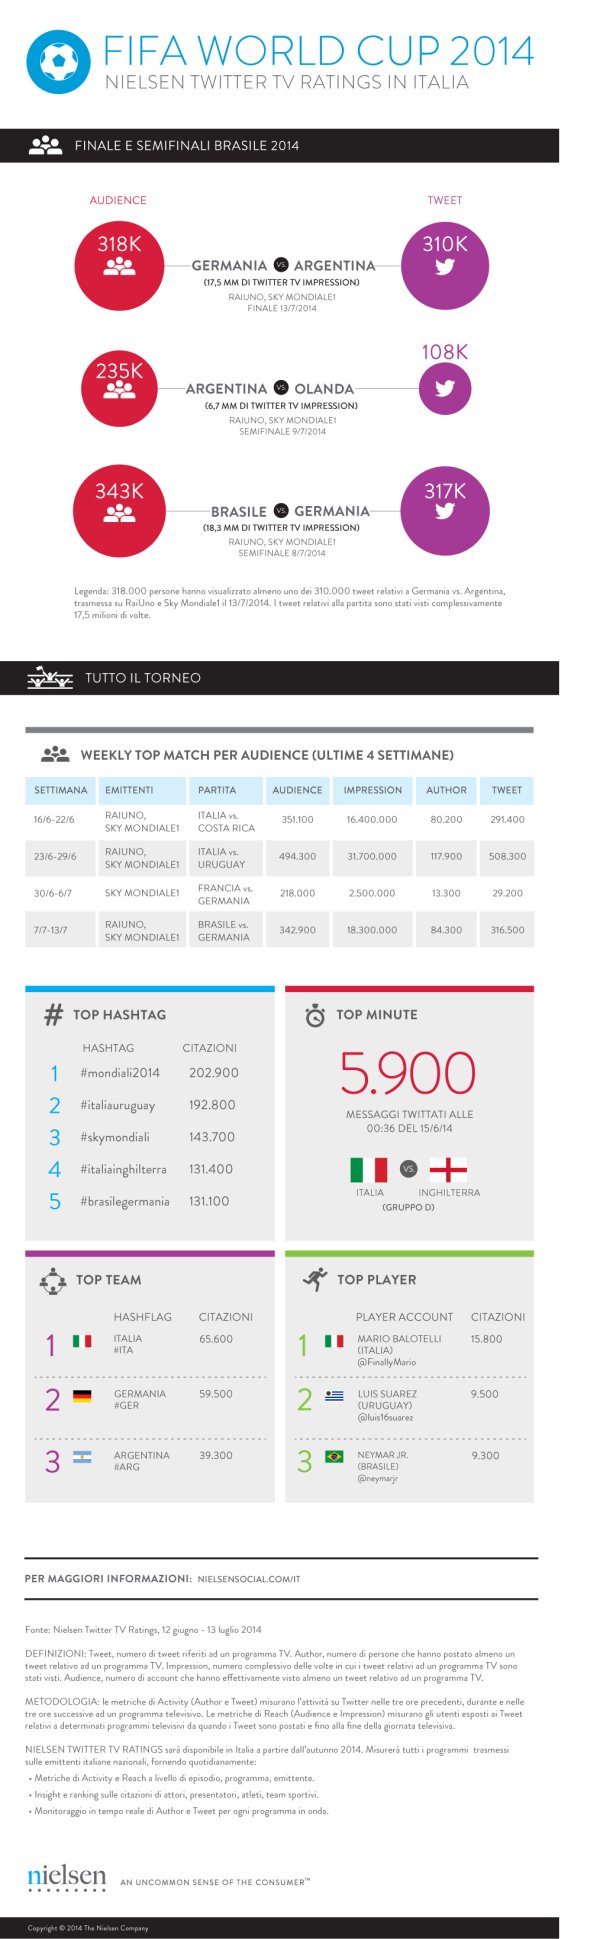 Nielsen Twitter TV Ratings, i primi dati italiani durante i Mondiali di Calcio